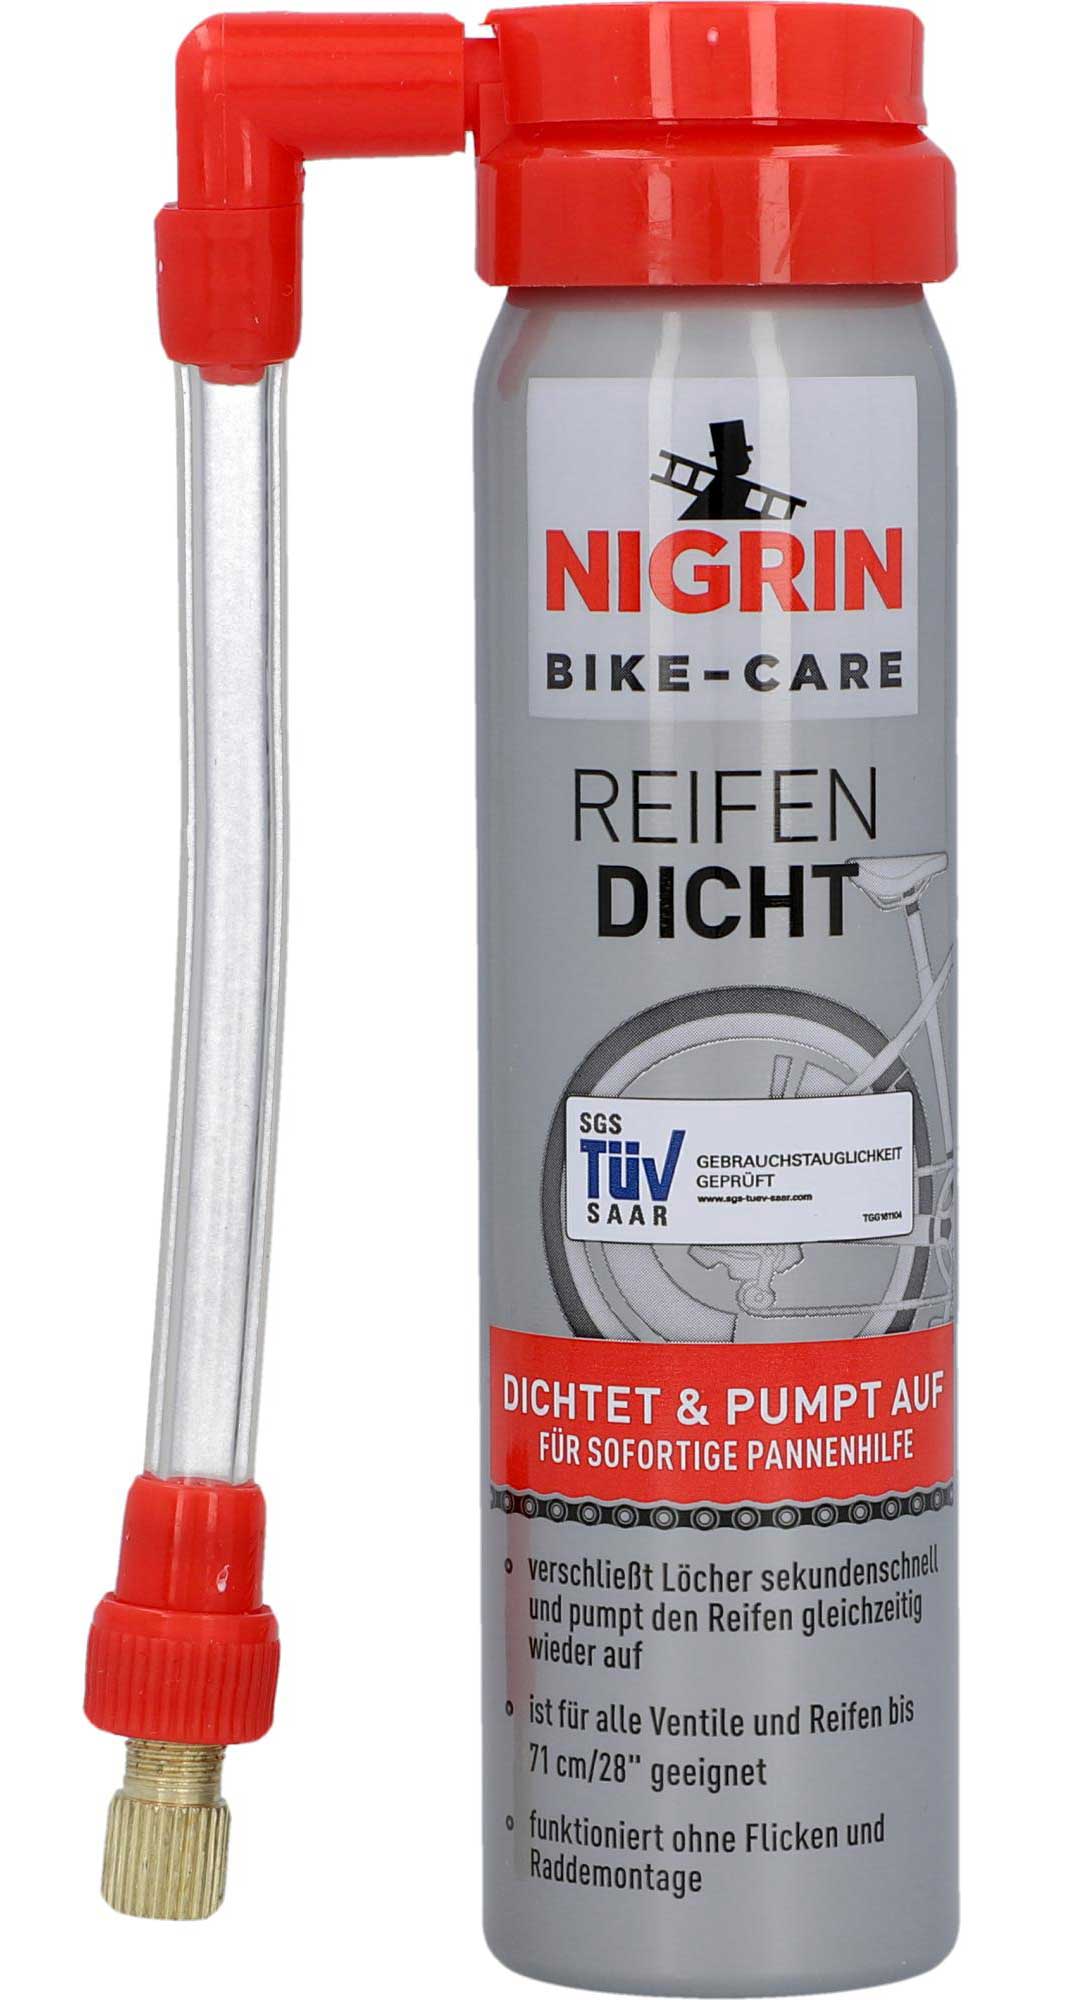 Nigrin BIKE-CARE Reifen-Dicht 75ml 60614, 1x